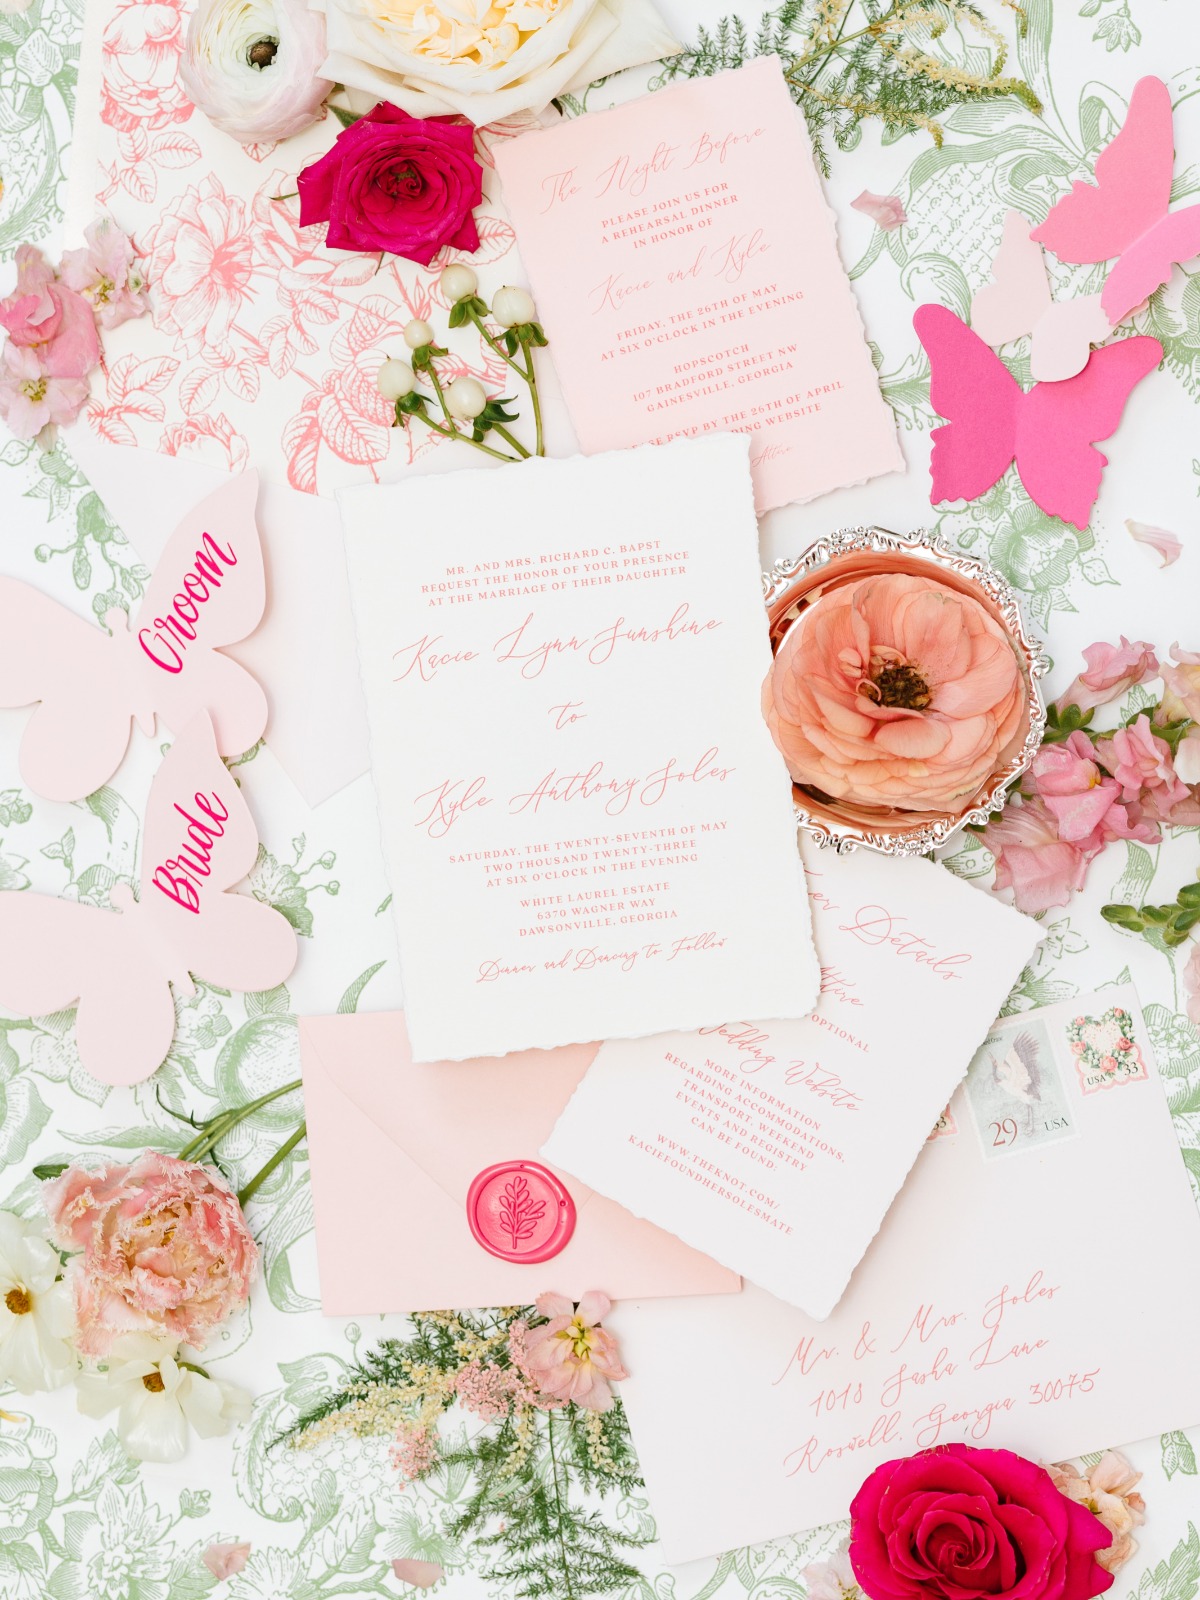 Elegant light pink and white wedding invitations in script